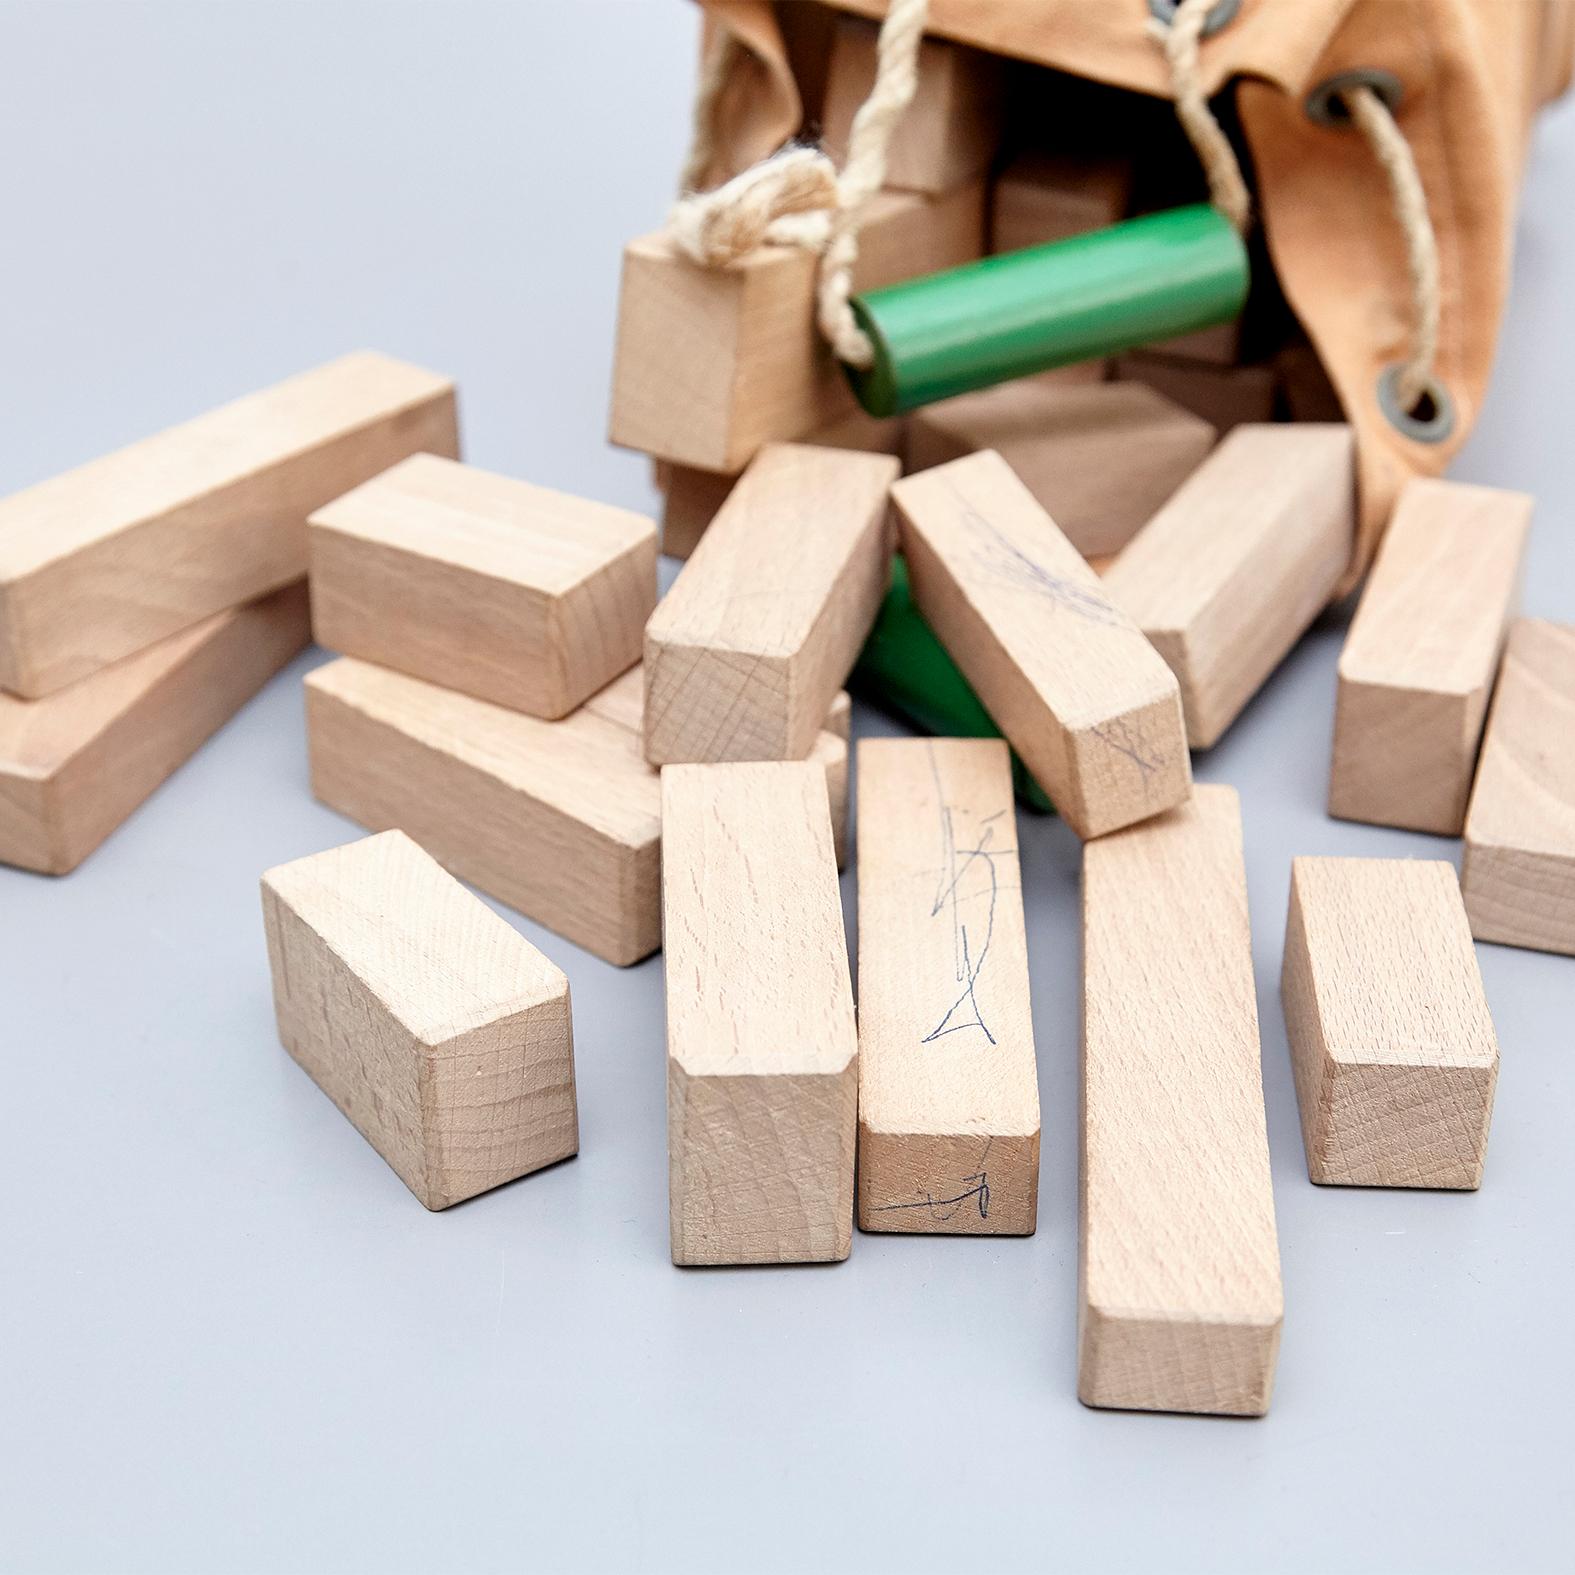 Ko Verzuu for Ado, Mid-Century Modern, Wood Blocks Construction Netherlands Toy  1